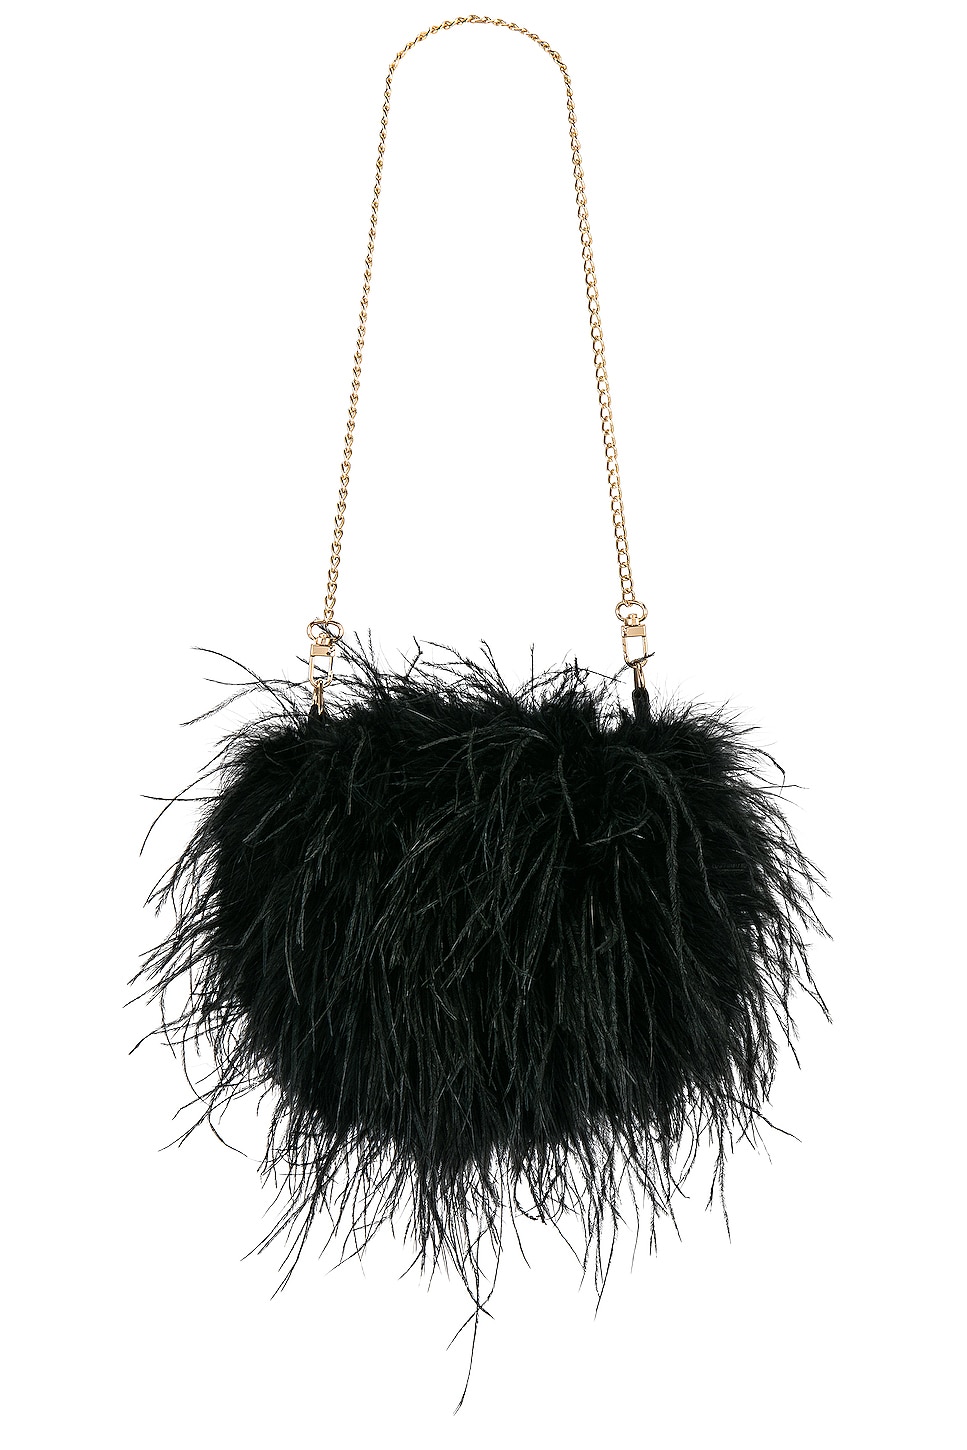 Loeffler Randall Zahara Handbag in Black Feathers